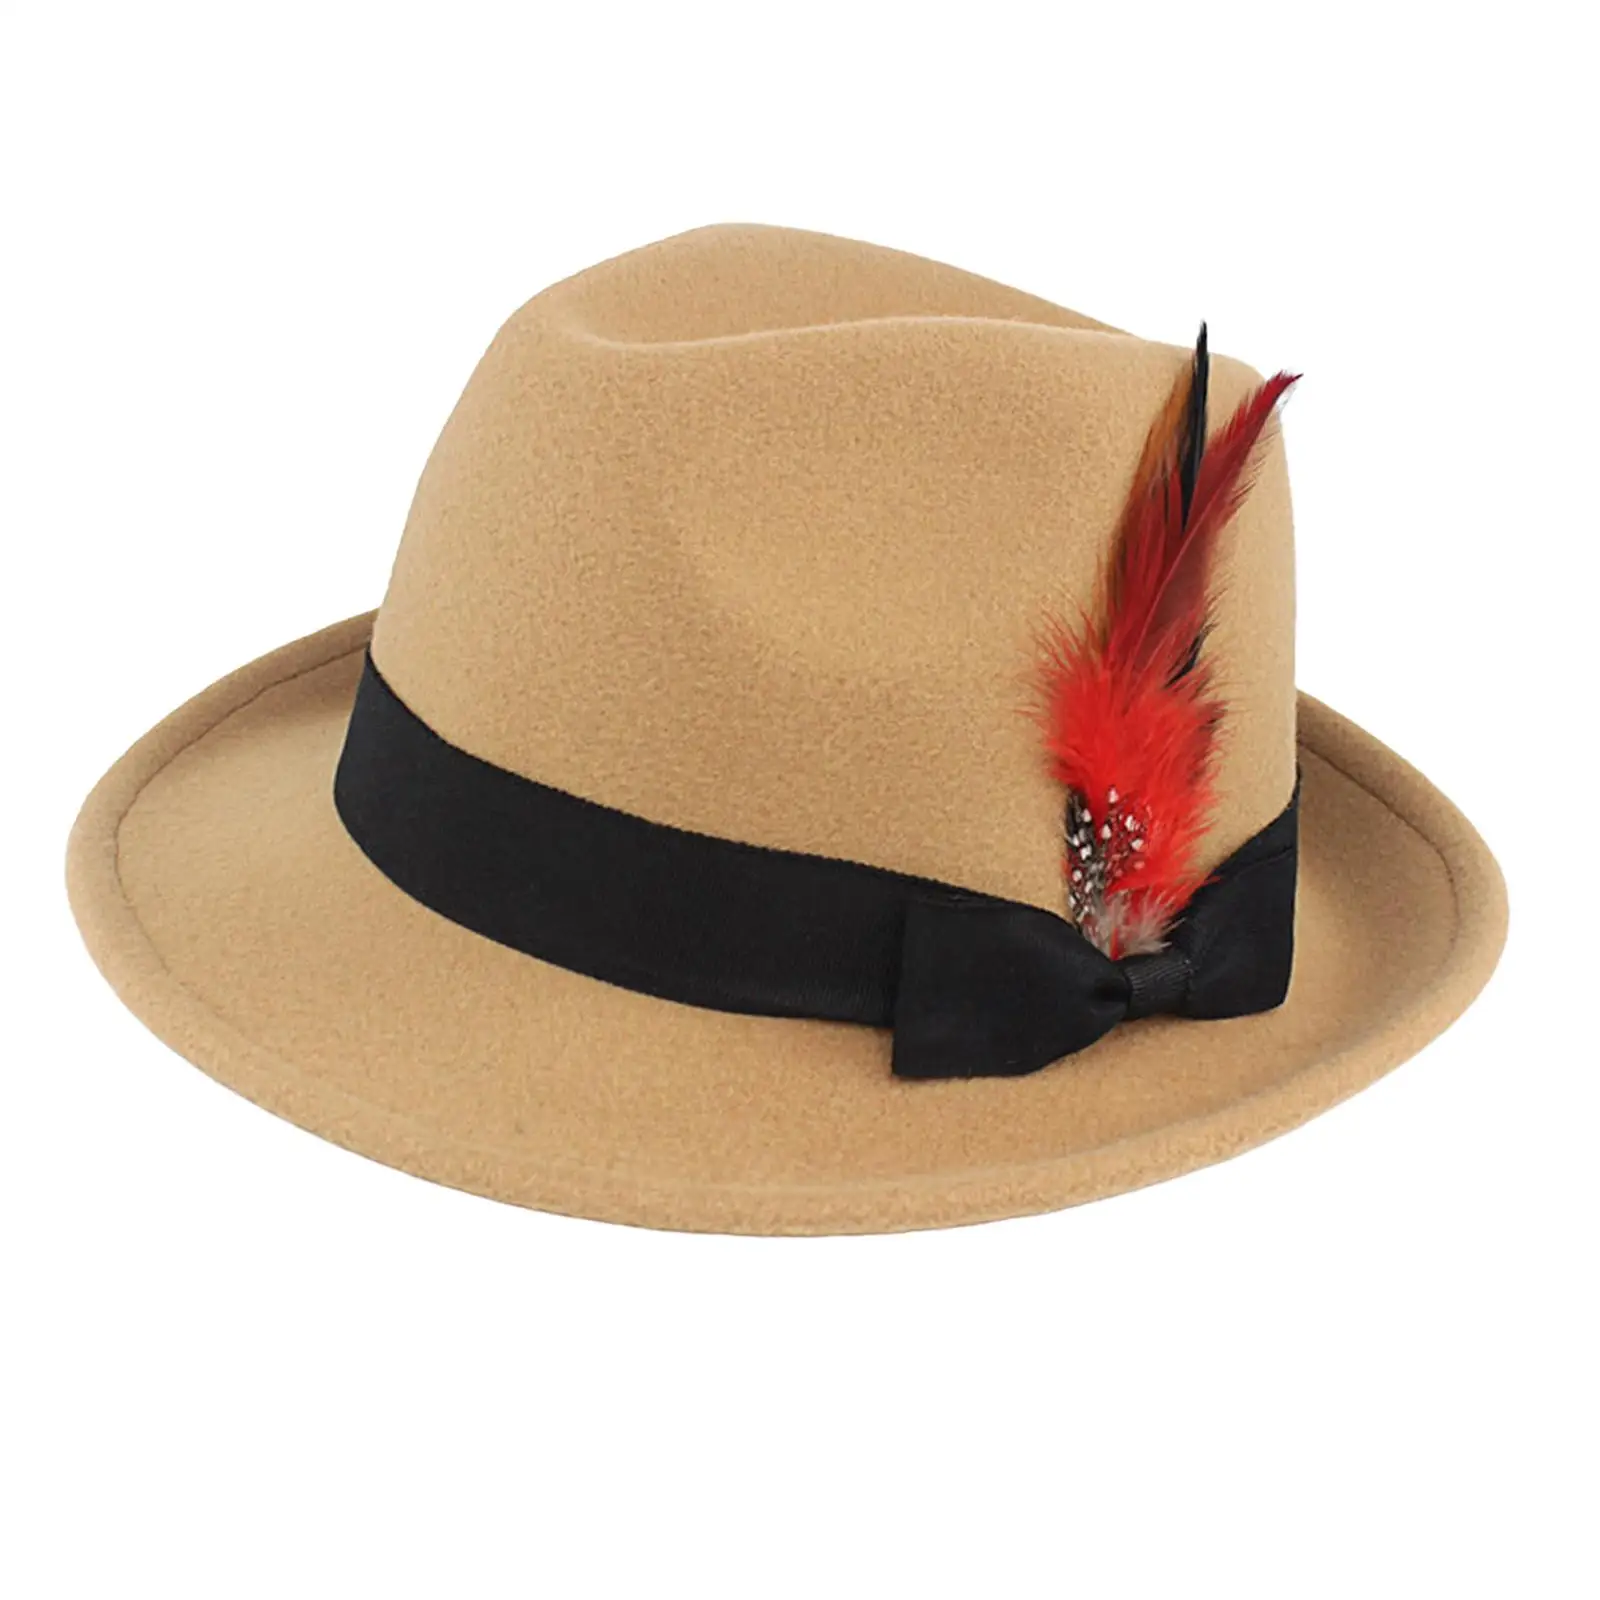 Classic Fedora Hats Short Brim Gentleman Jazz Cap Sunhat Casual Jazz Cap for Men and Women Outdoor Travel Summer Beach